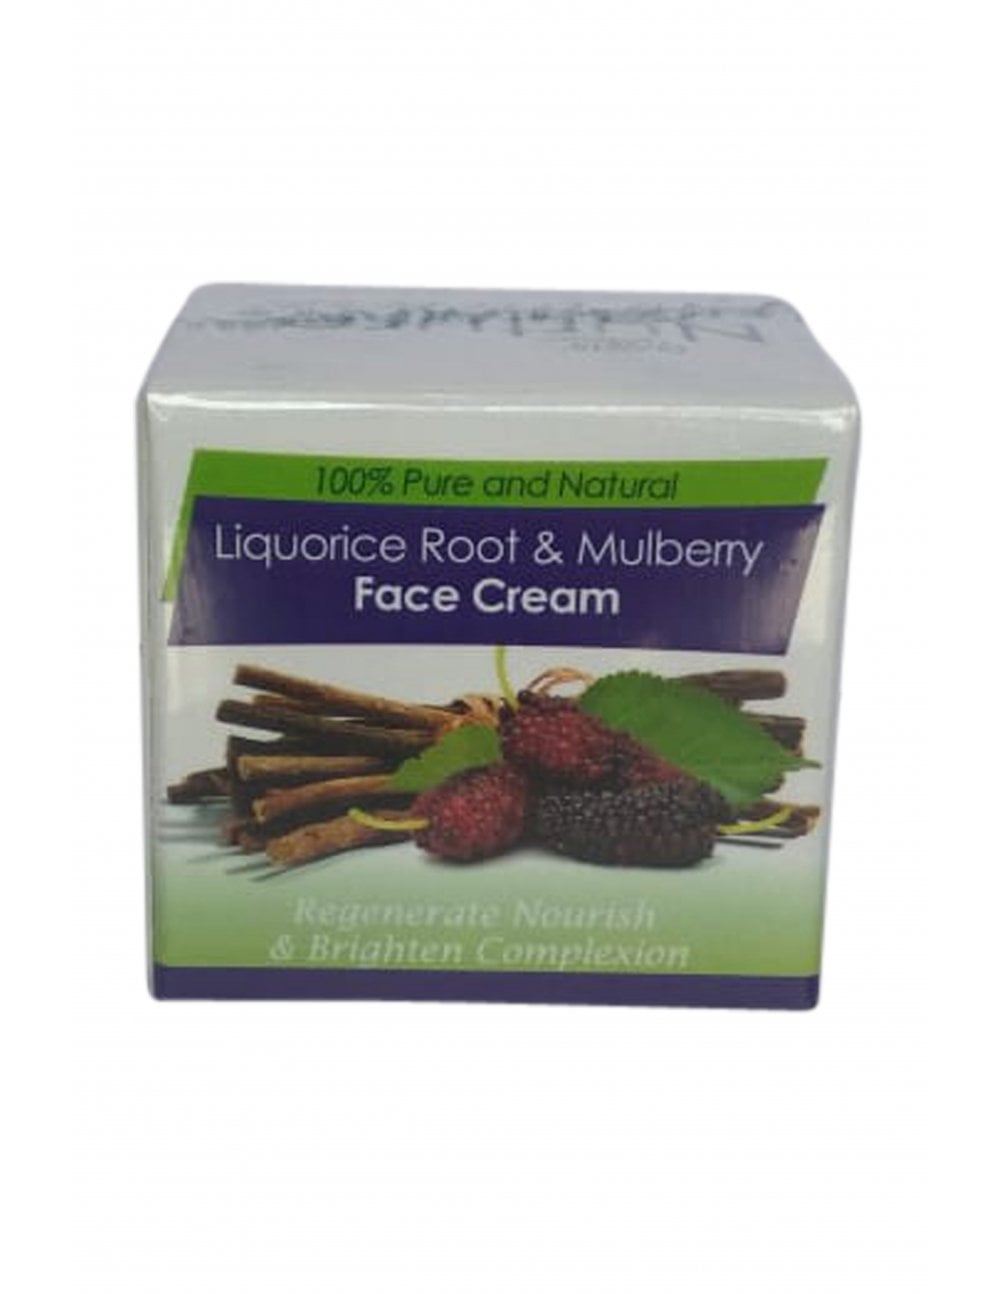 Liquorice & Mulberry Face Cream davisfinest.com 2